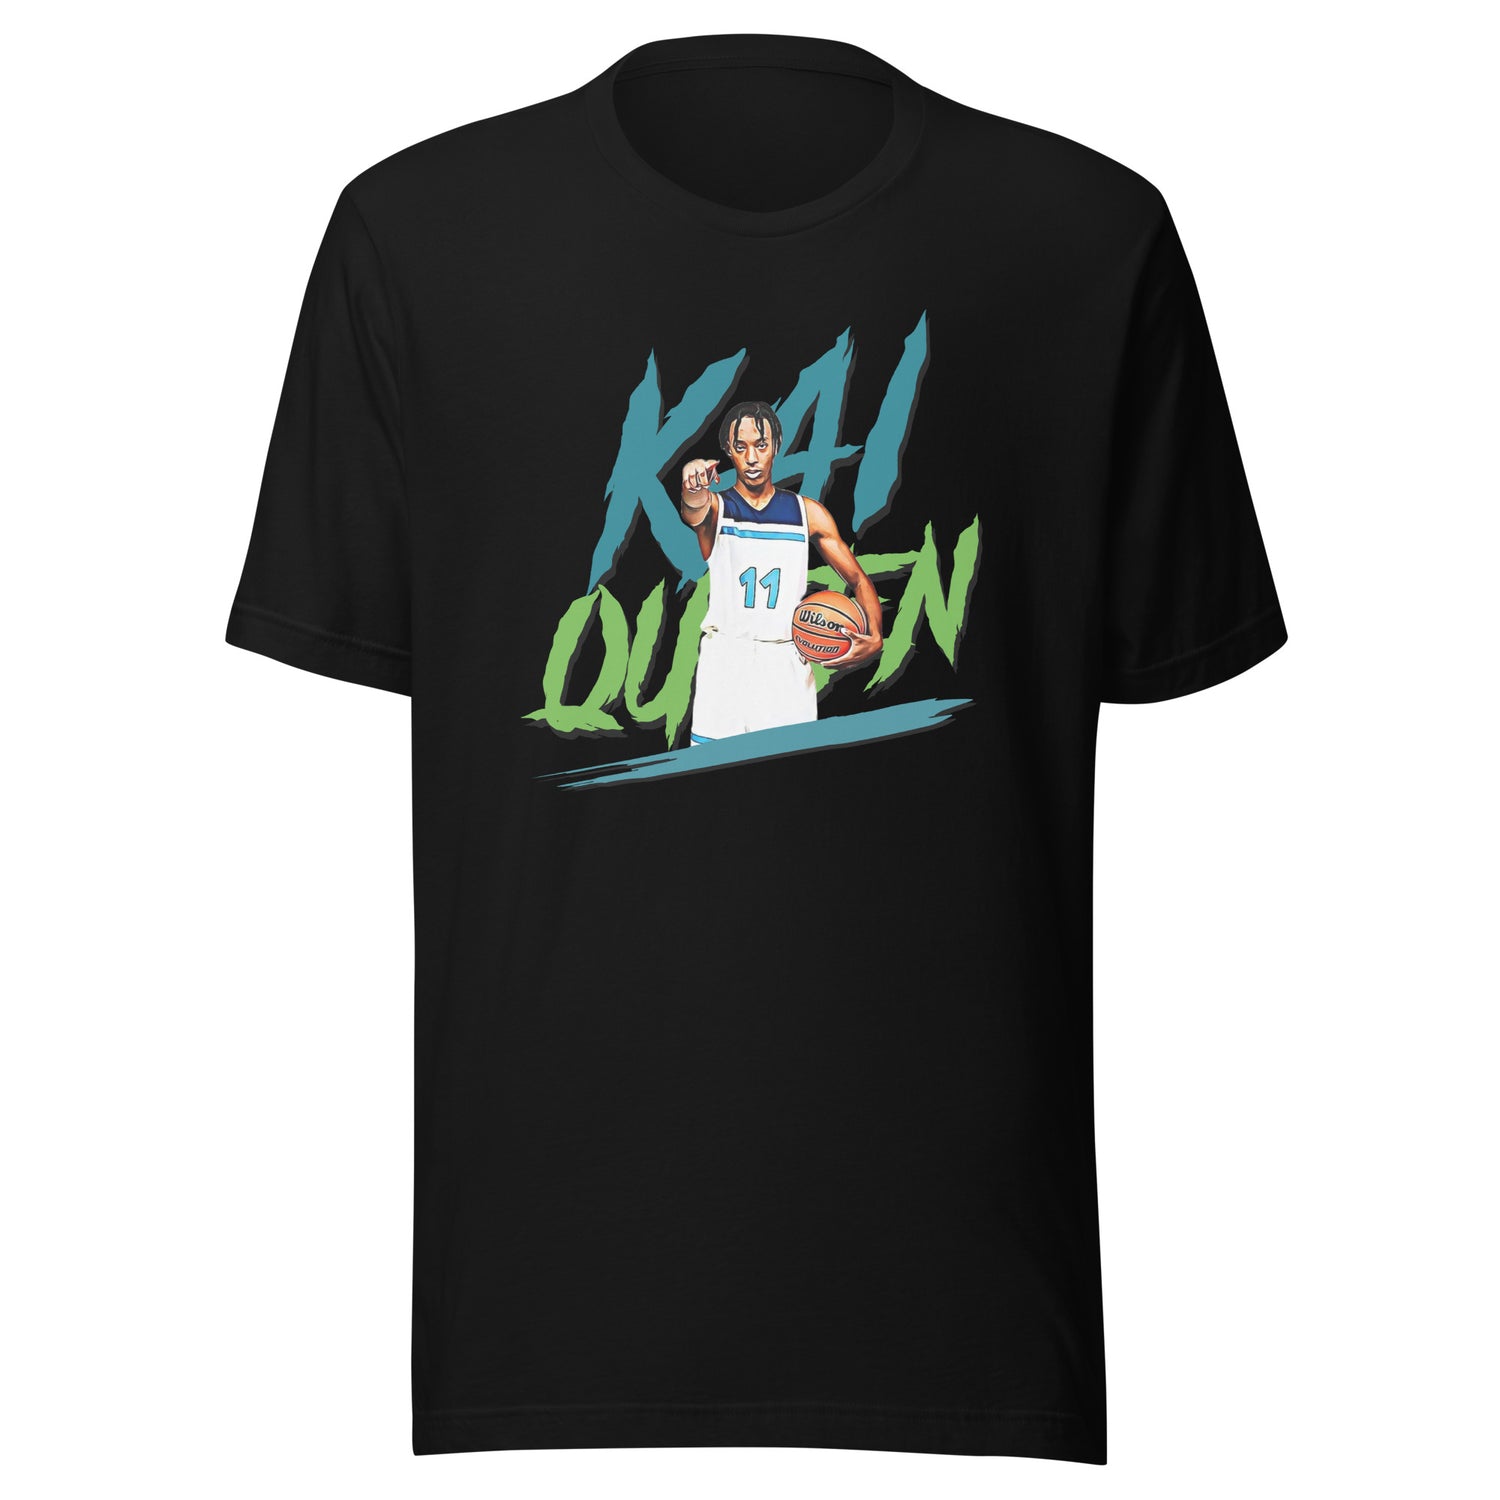 Kai Queen "Gameday" t-shirt - Fan Arch